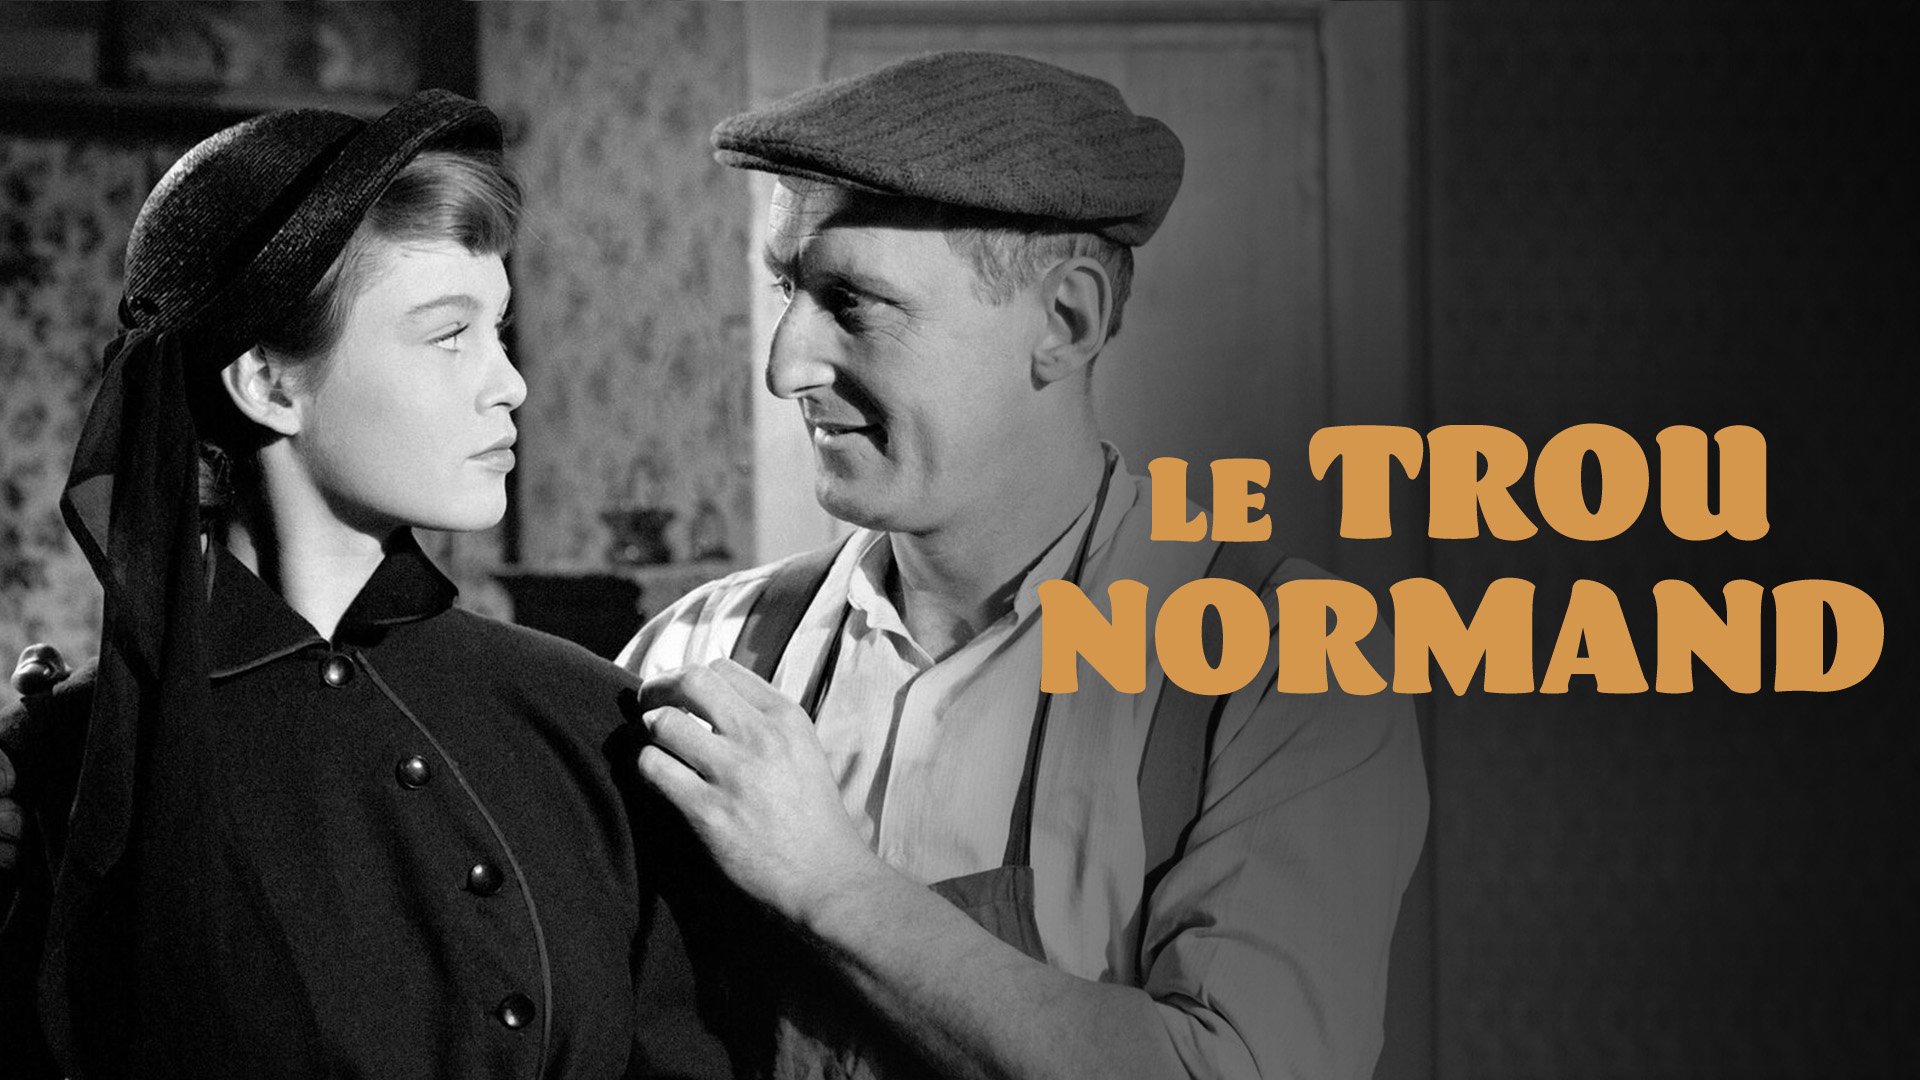 Le trou normand en streaming - France TV